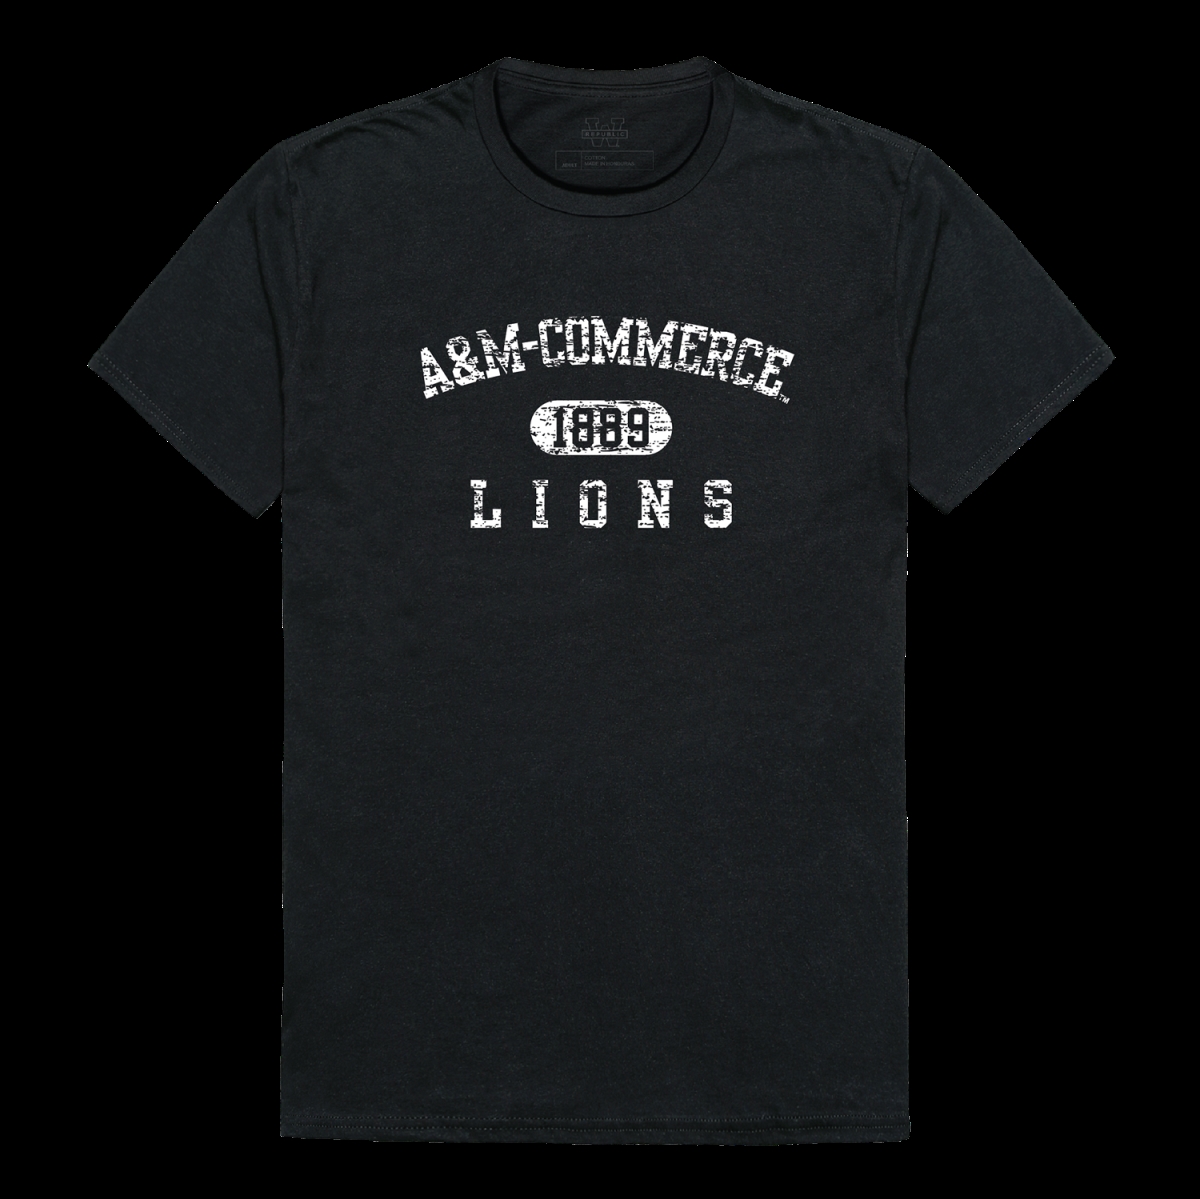 W Republic 574-595-BLK-02 Texas A&M University Commerce Lions Distressed Arch College T-Shirt&#44; Black - Medium